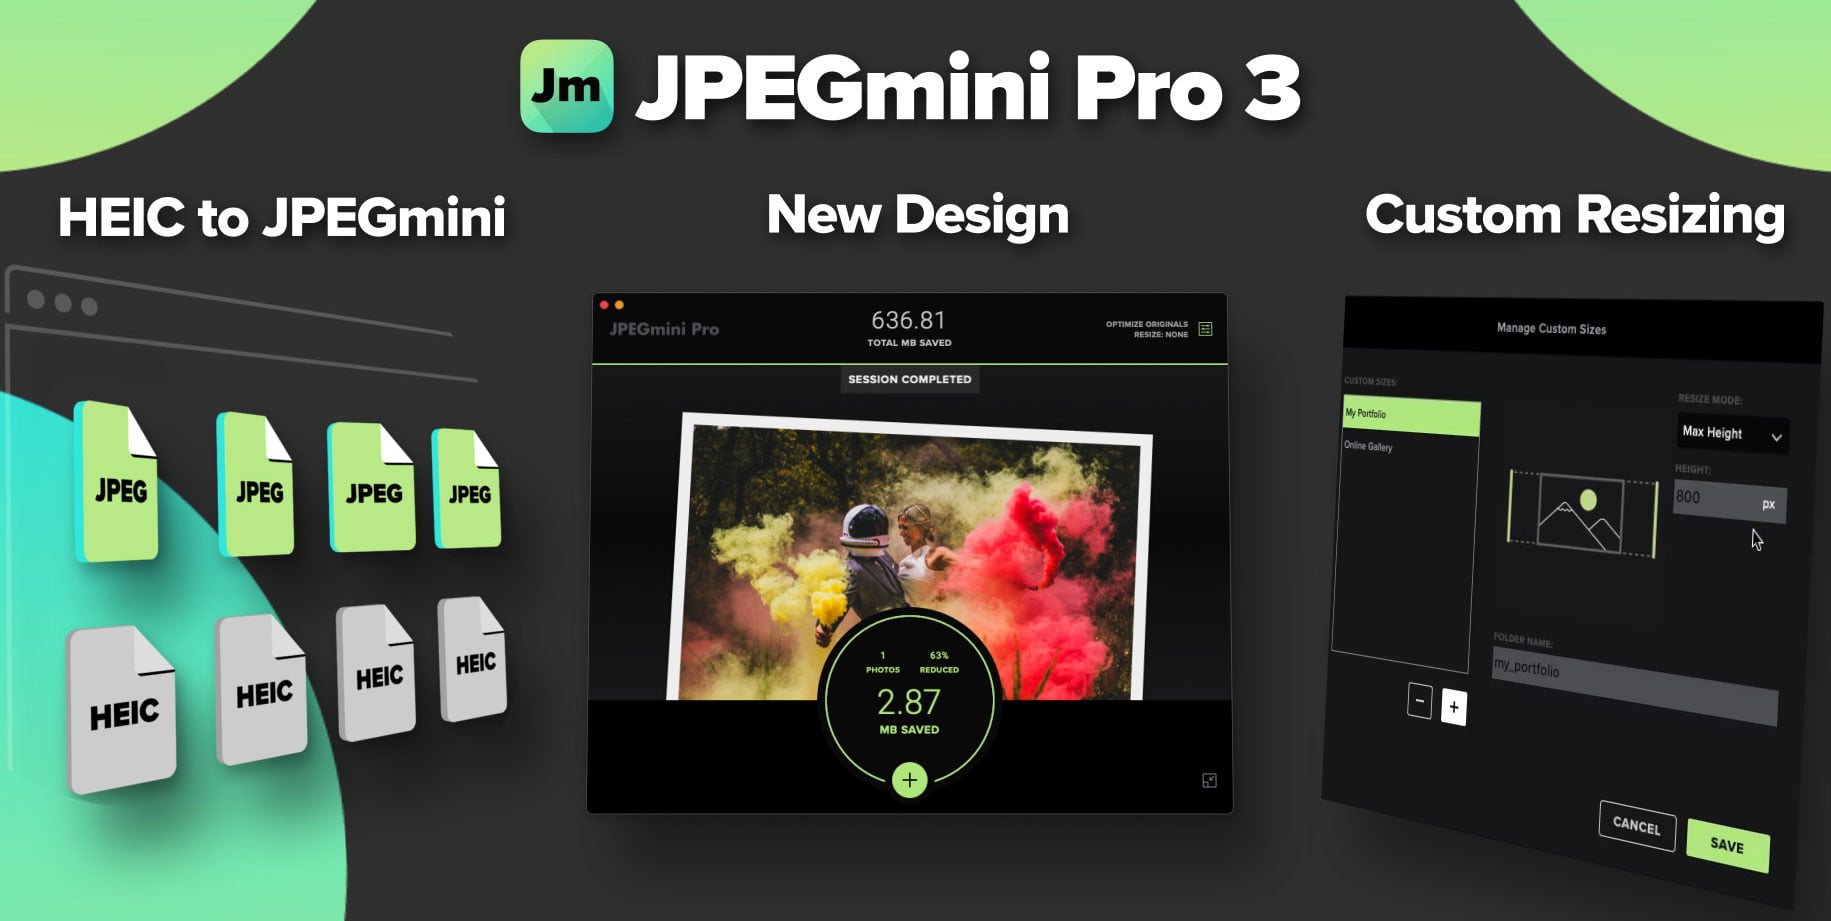 JPEGmini Pro 